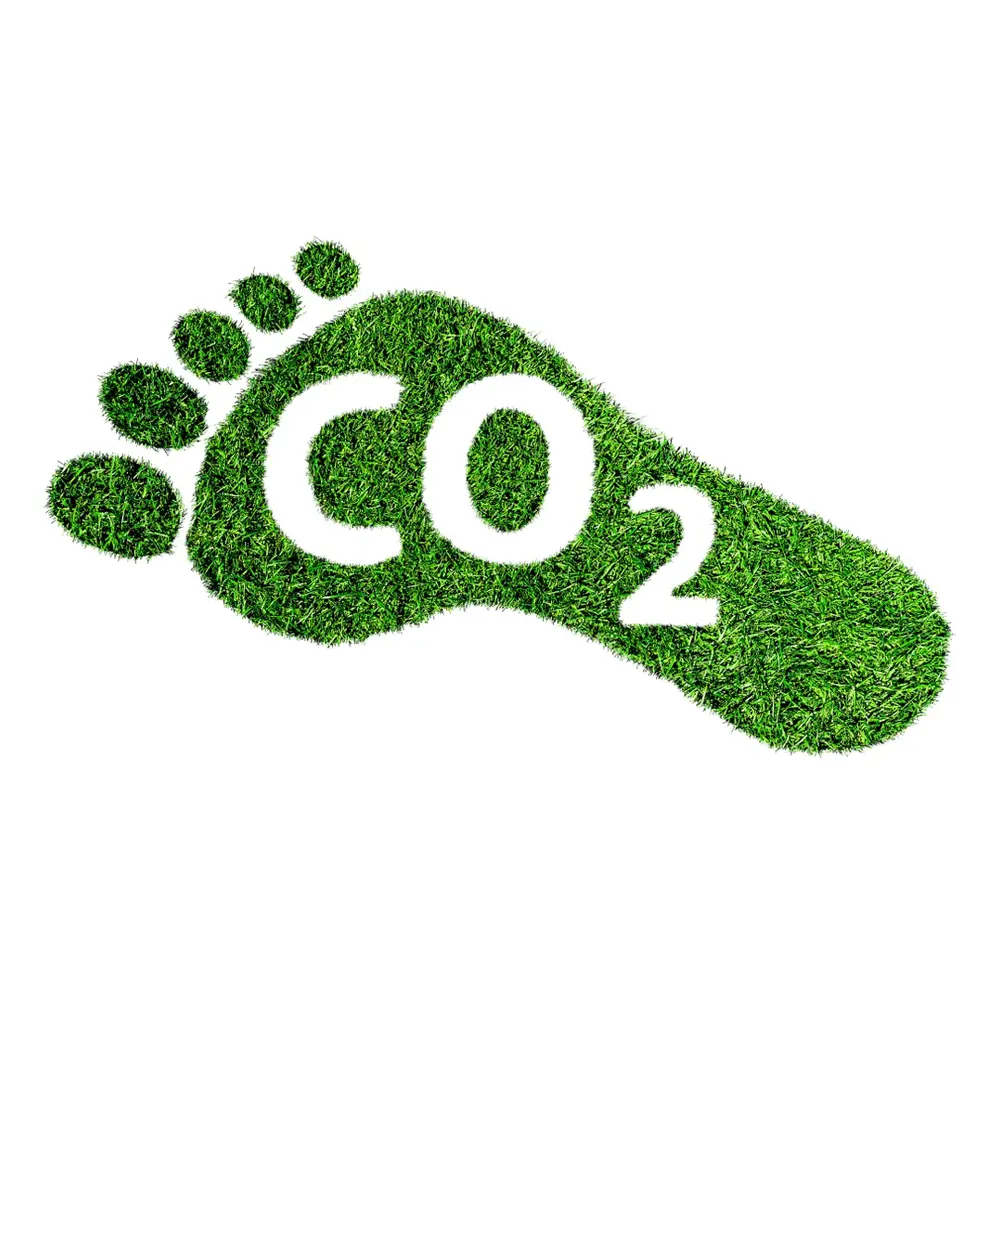 A footprint made of grass, with the text "CO2" written inside